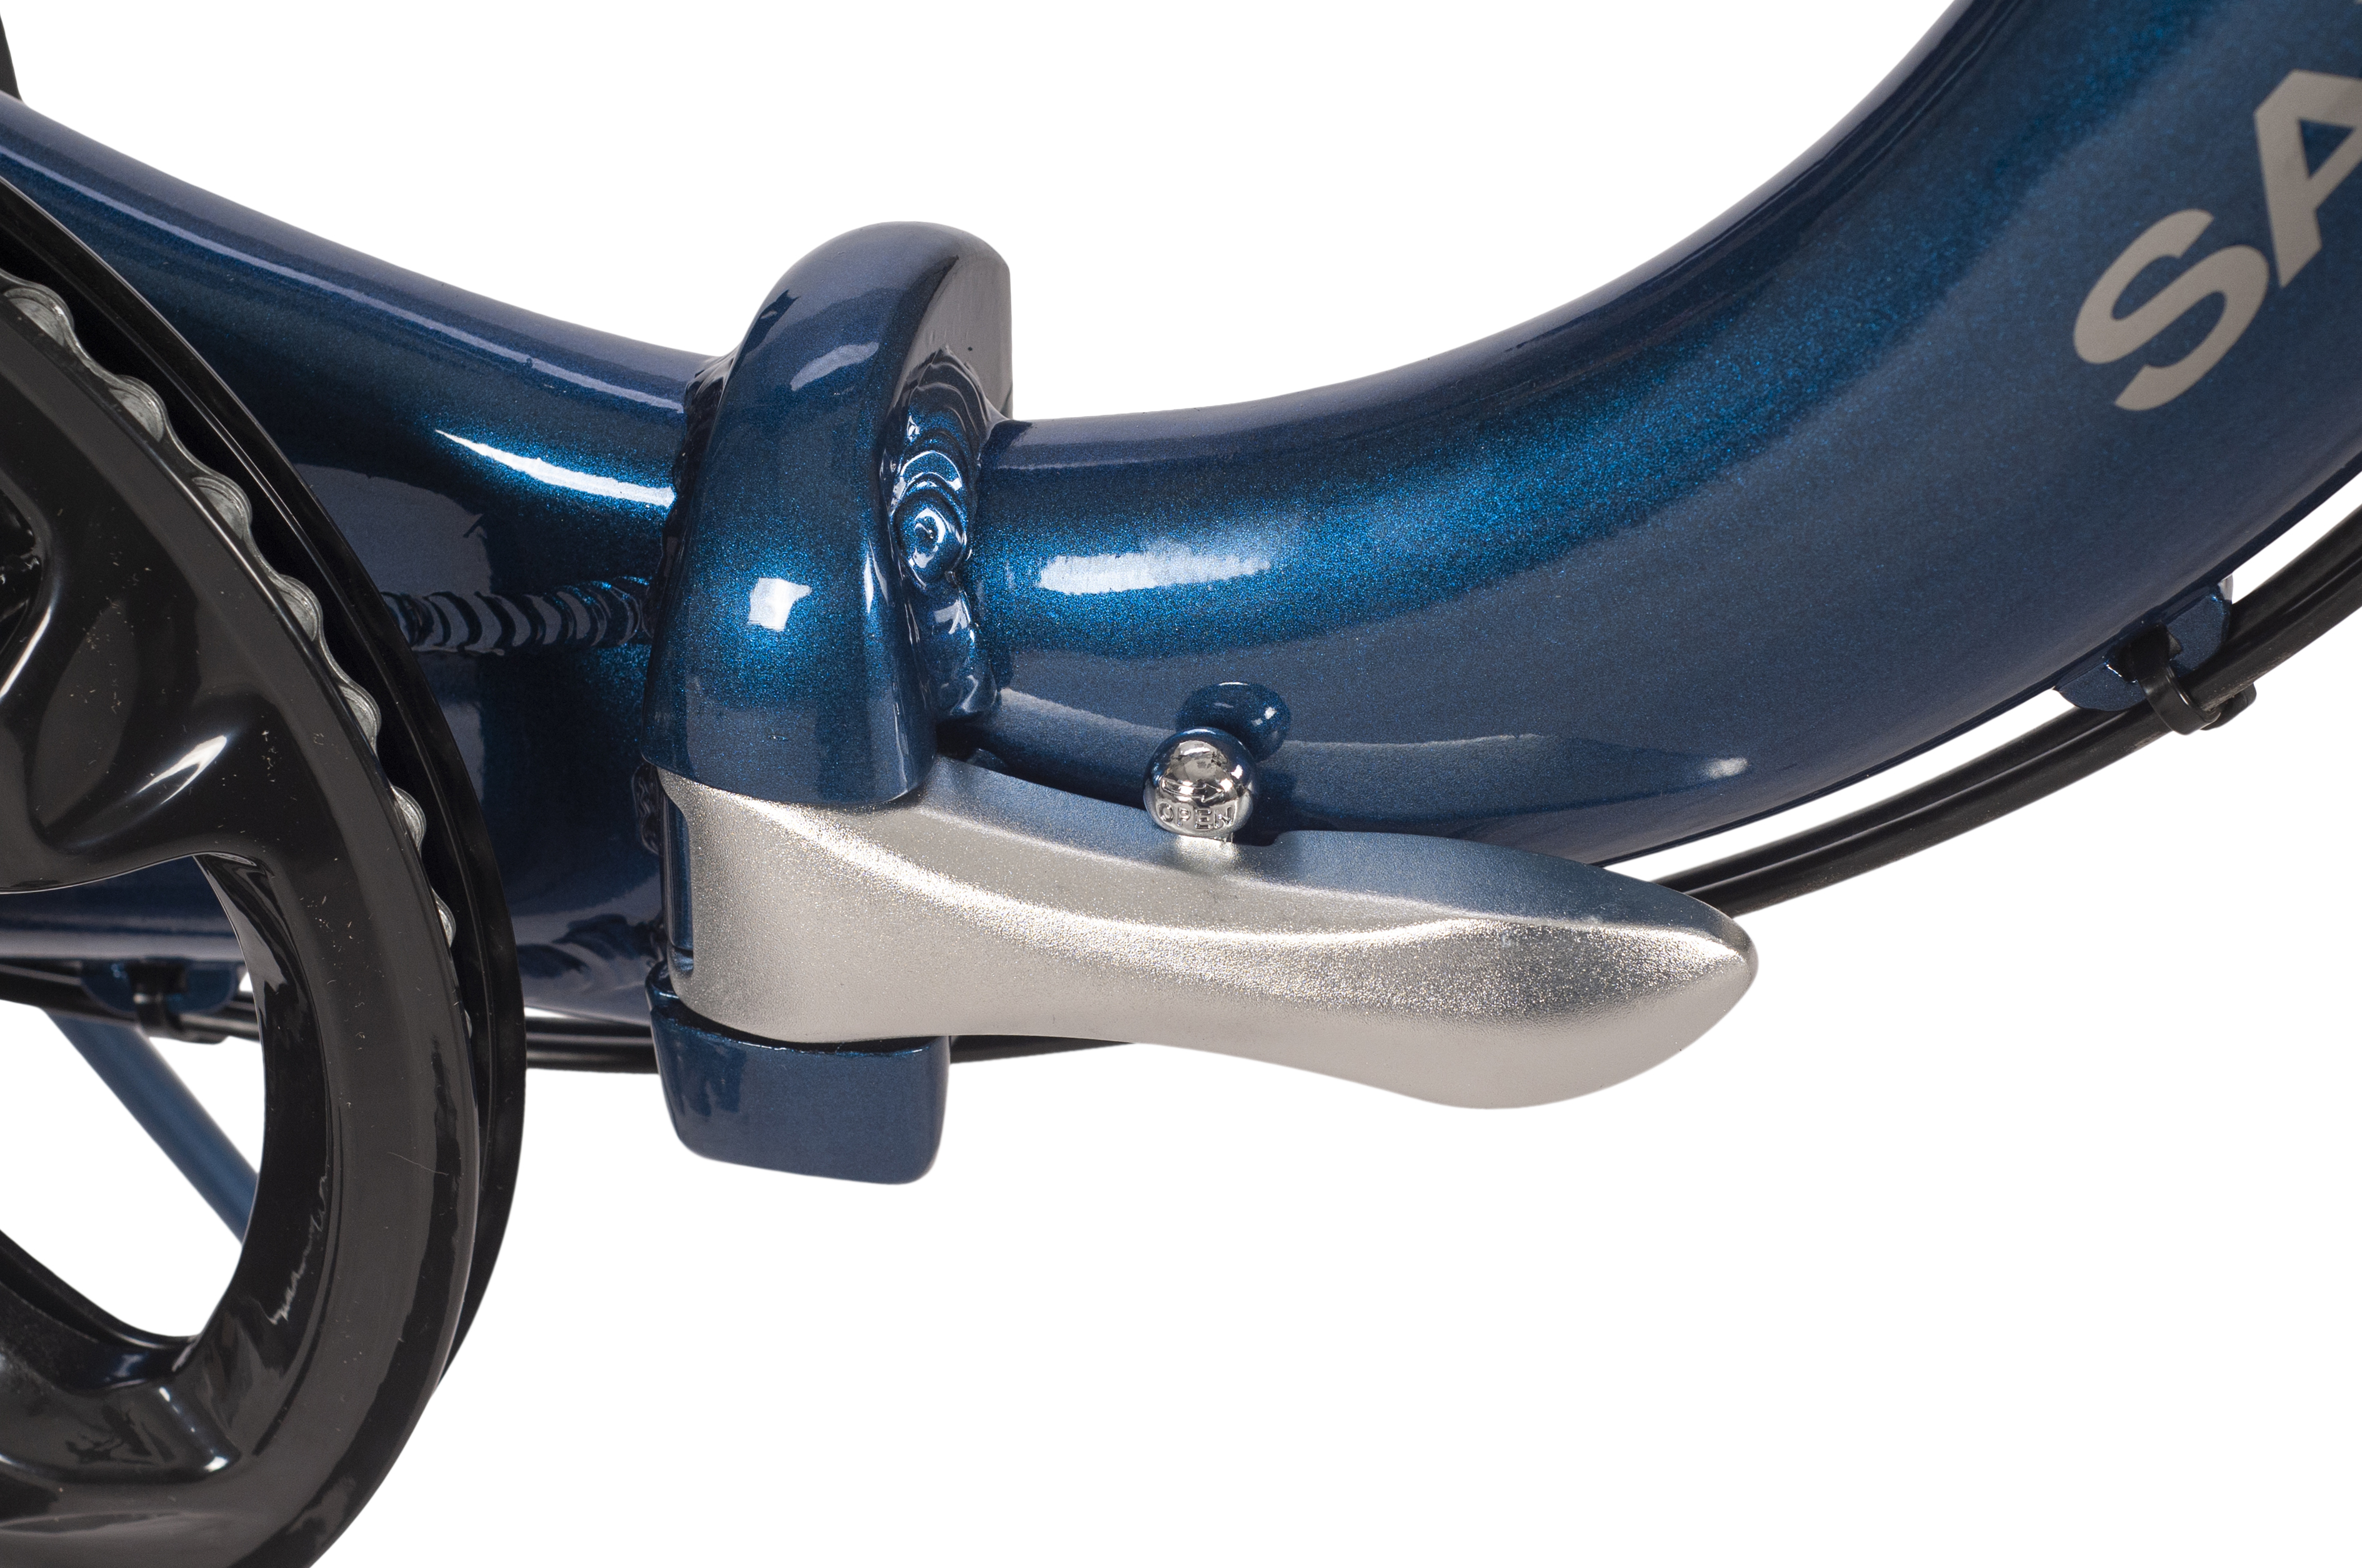 SAXXX Foldi Plus 2.0 E-Faltrad Vorderradmotor Rücktrittbremse Stahlgabel 3 Gang Wave nachtblau glänzend